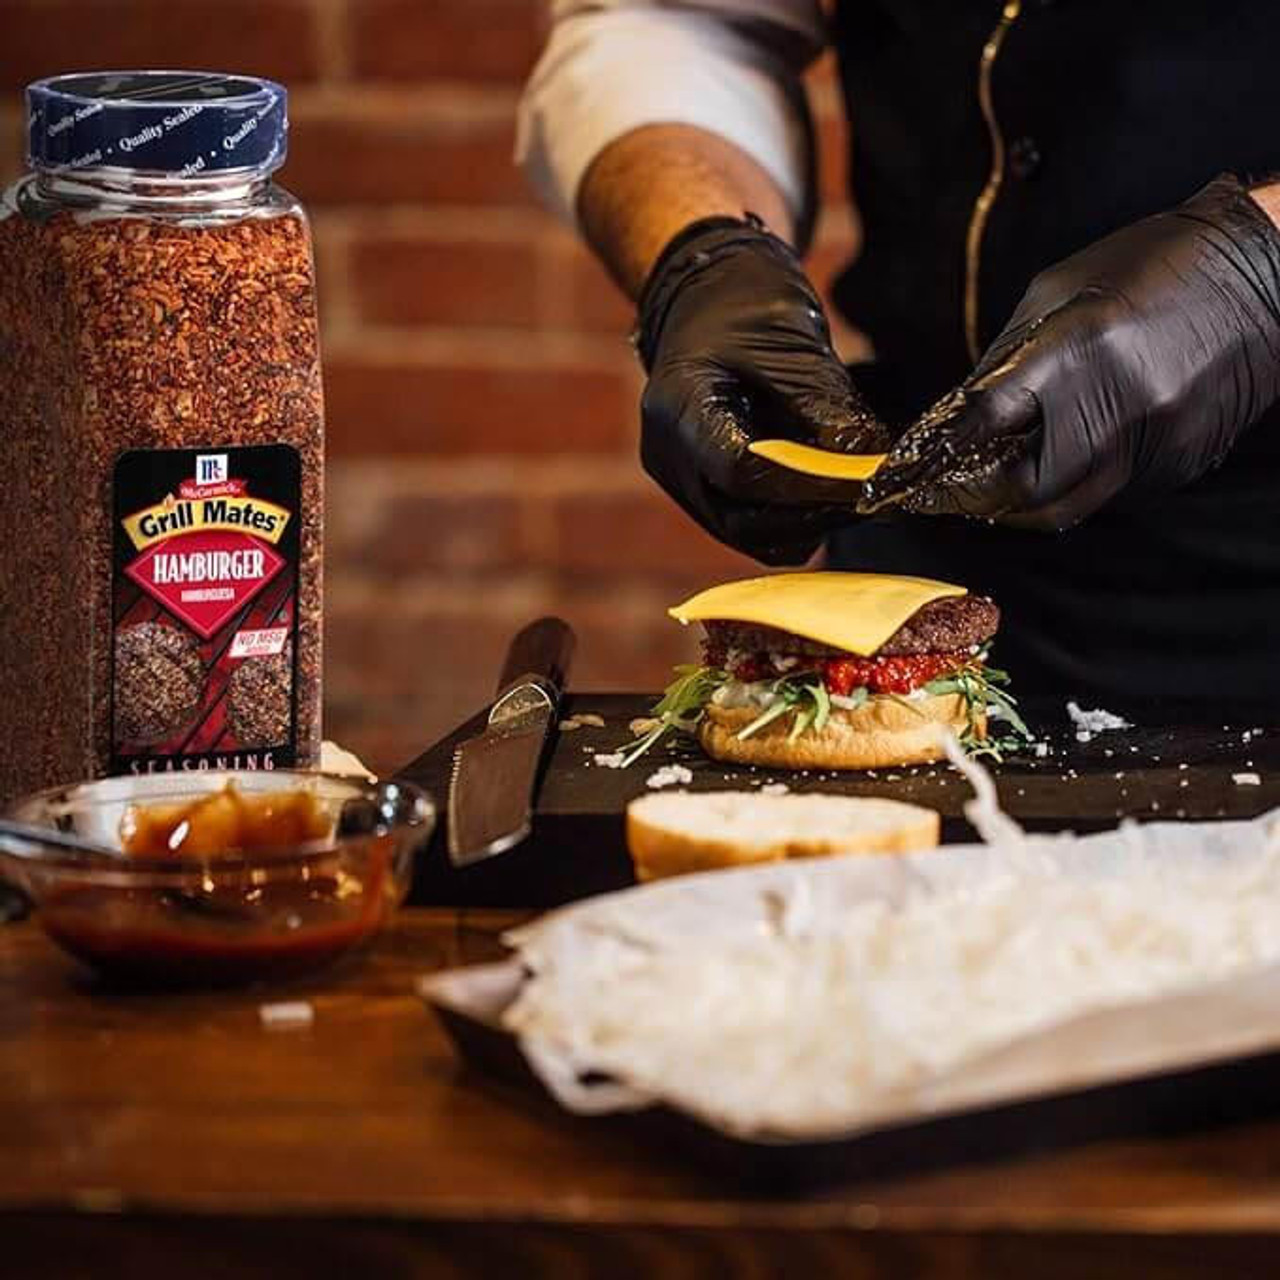  McCormick Grill Mates 24 oz. Hamburger Seasoning (6/Case) - Savory Blend 